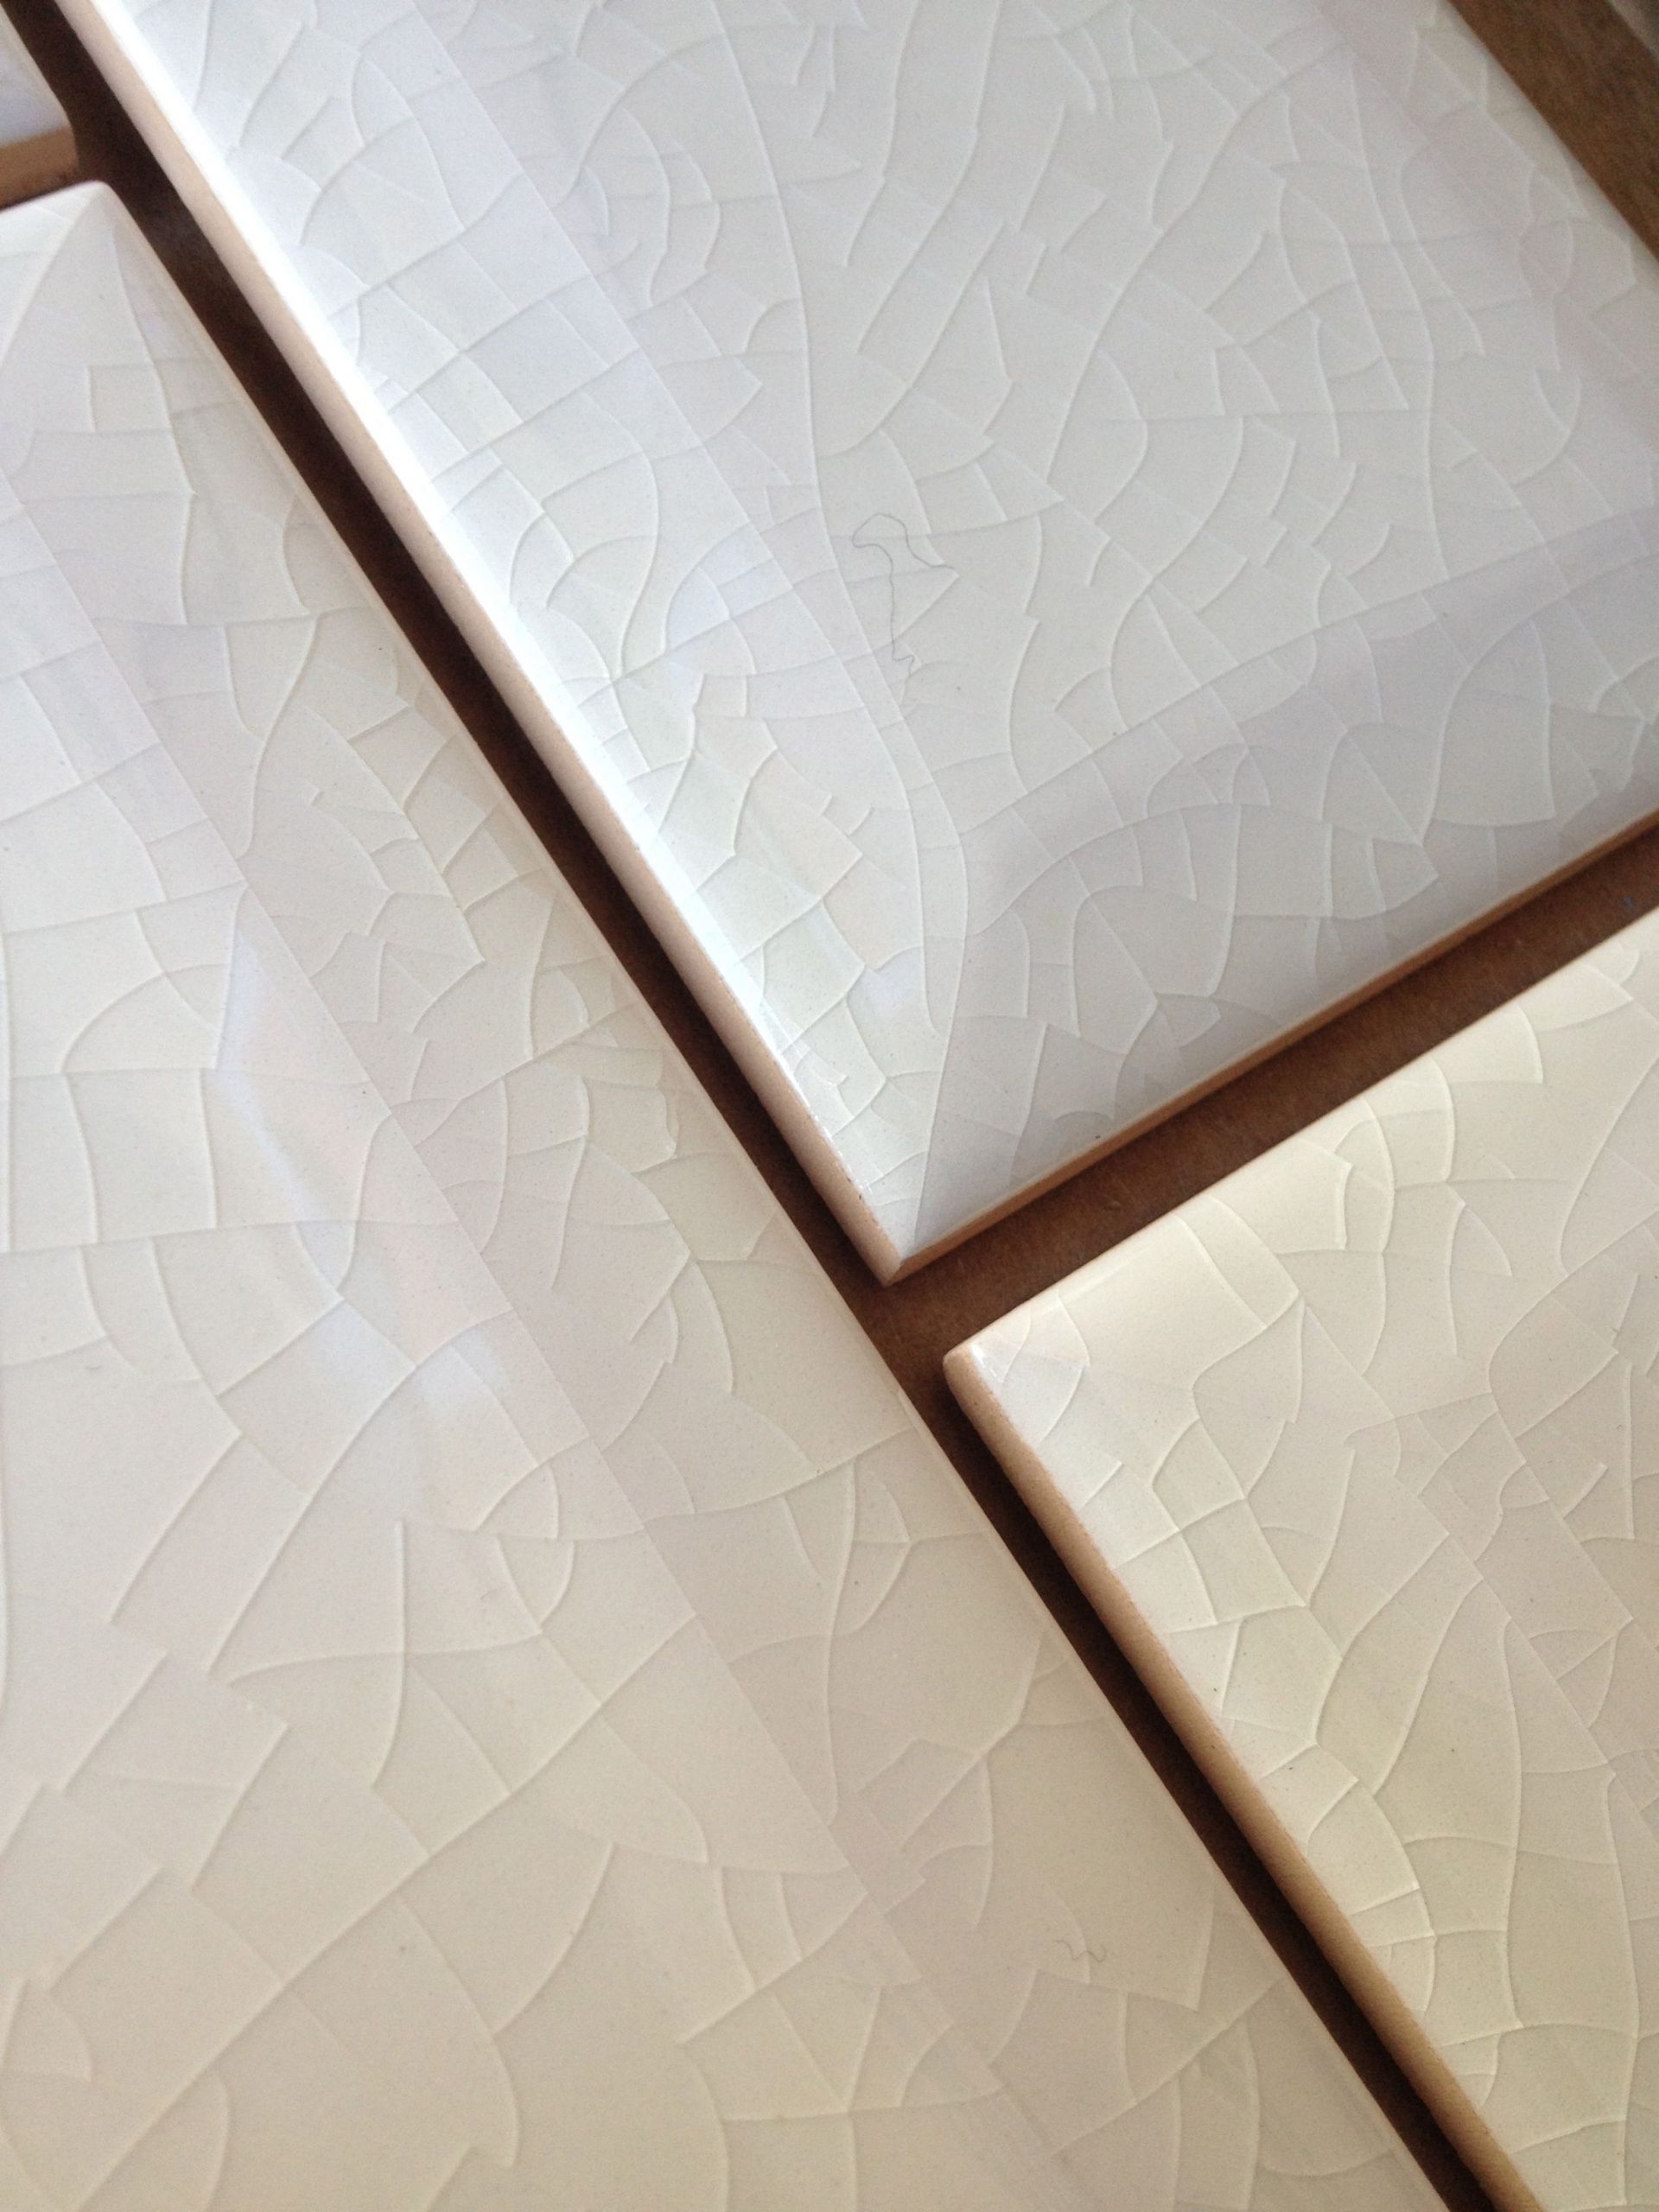 White Subway Tile Herringbone Inspirational Subway Tile for the Backsplash Has A Delicate Crackle Finish